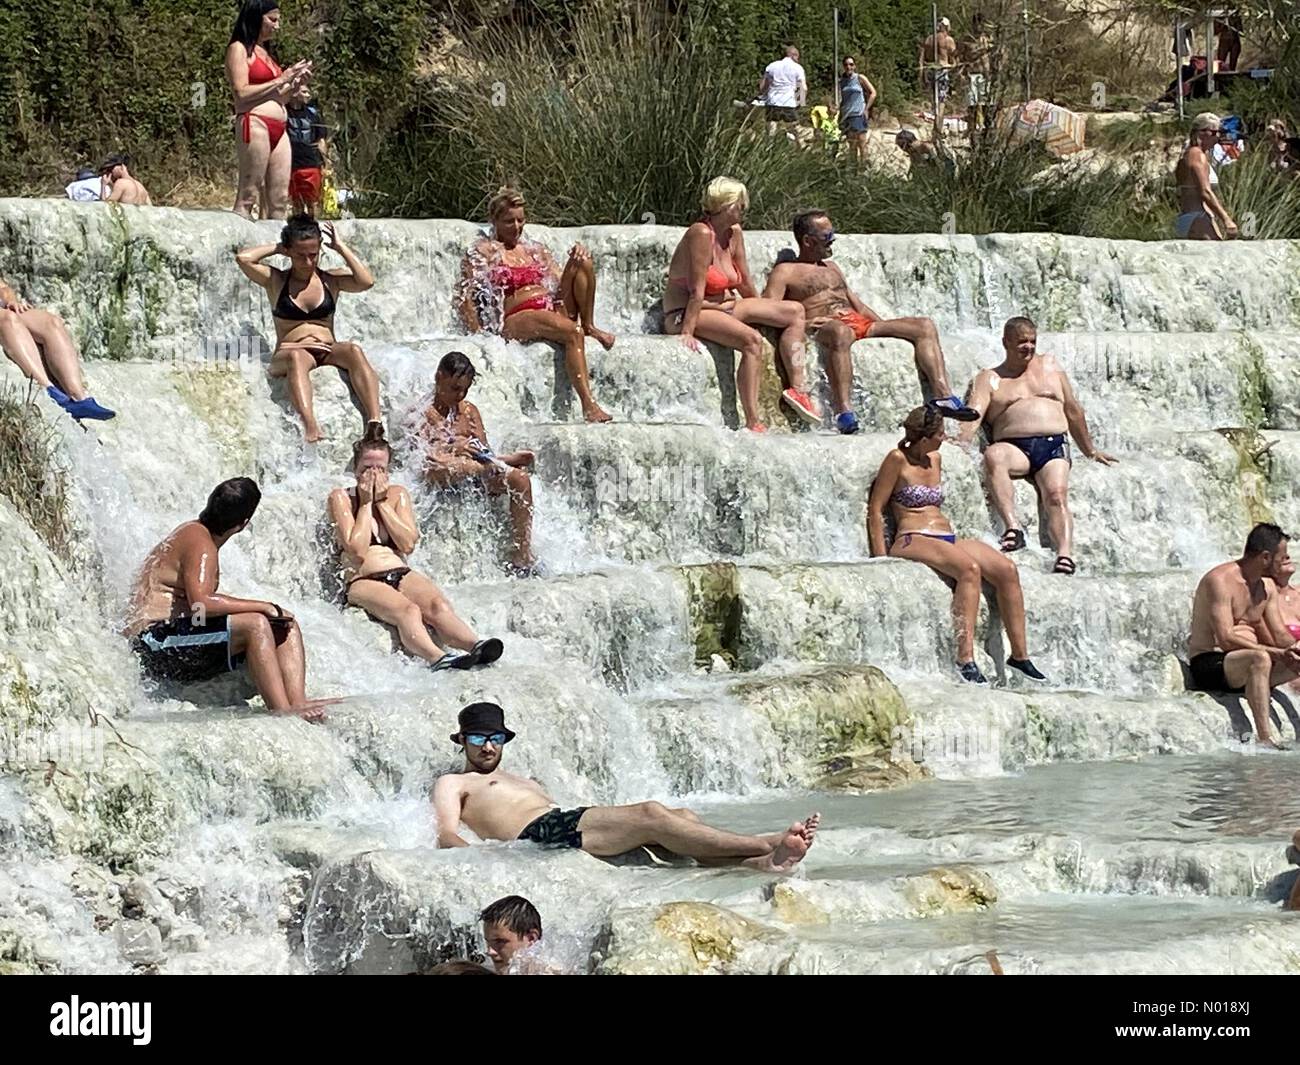 People enjoying the thermal waters at Saturnia, Tuscany, Italy Credit: amer ghazzal/StockimoNews/Alamy Live News Stock Photo